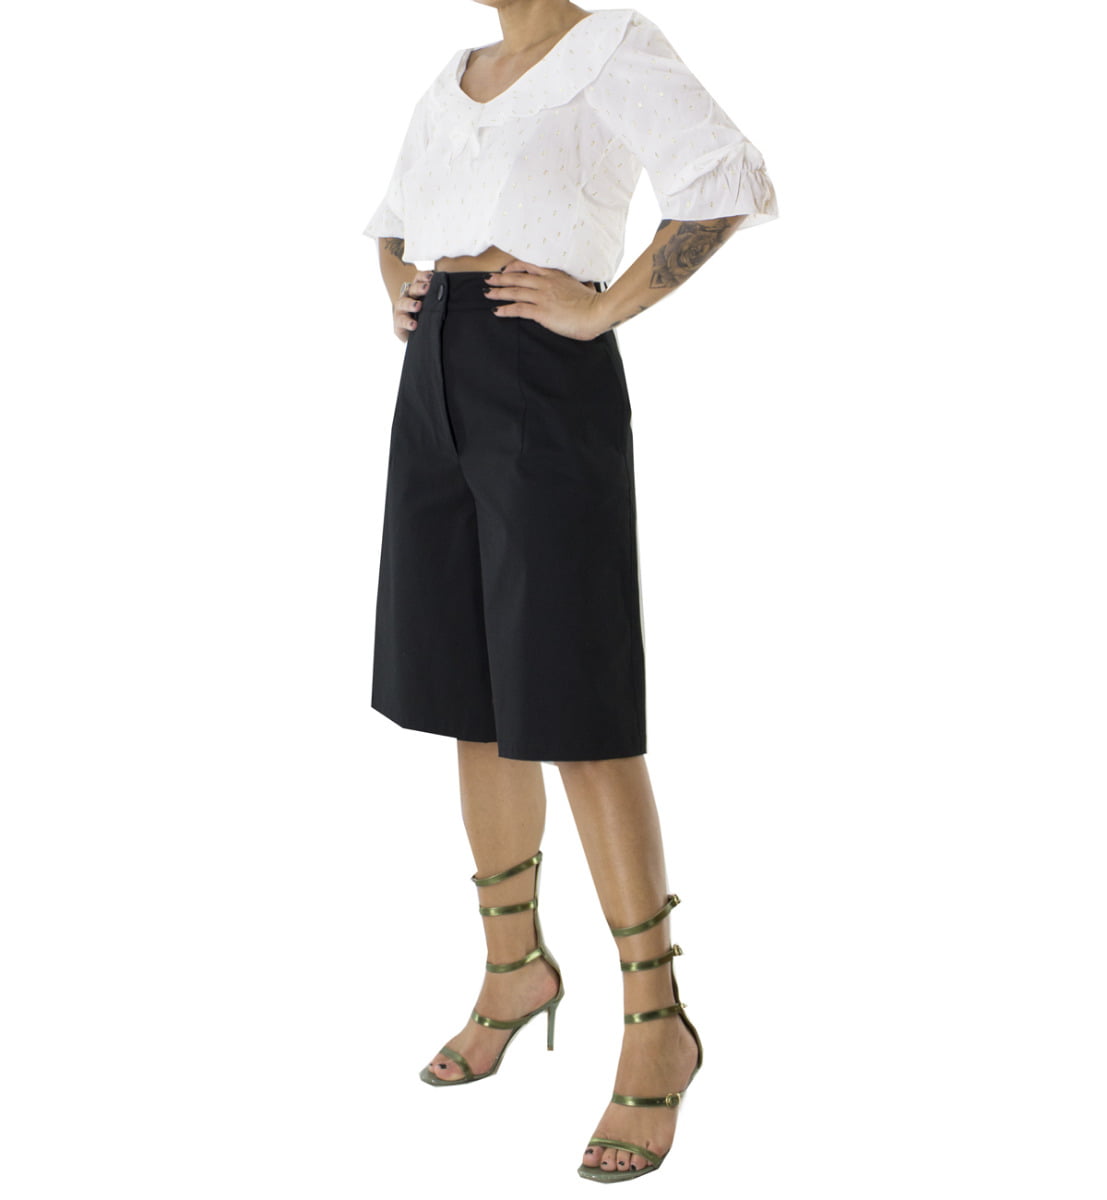 Pantaloni donna bermuda in cotone vita alta con passacinta bottone nero a contrasto gamba larga